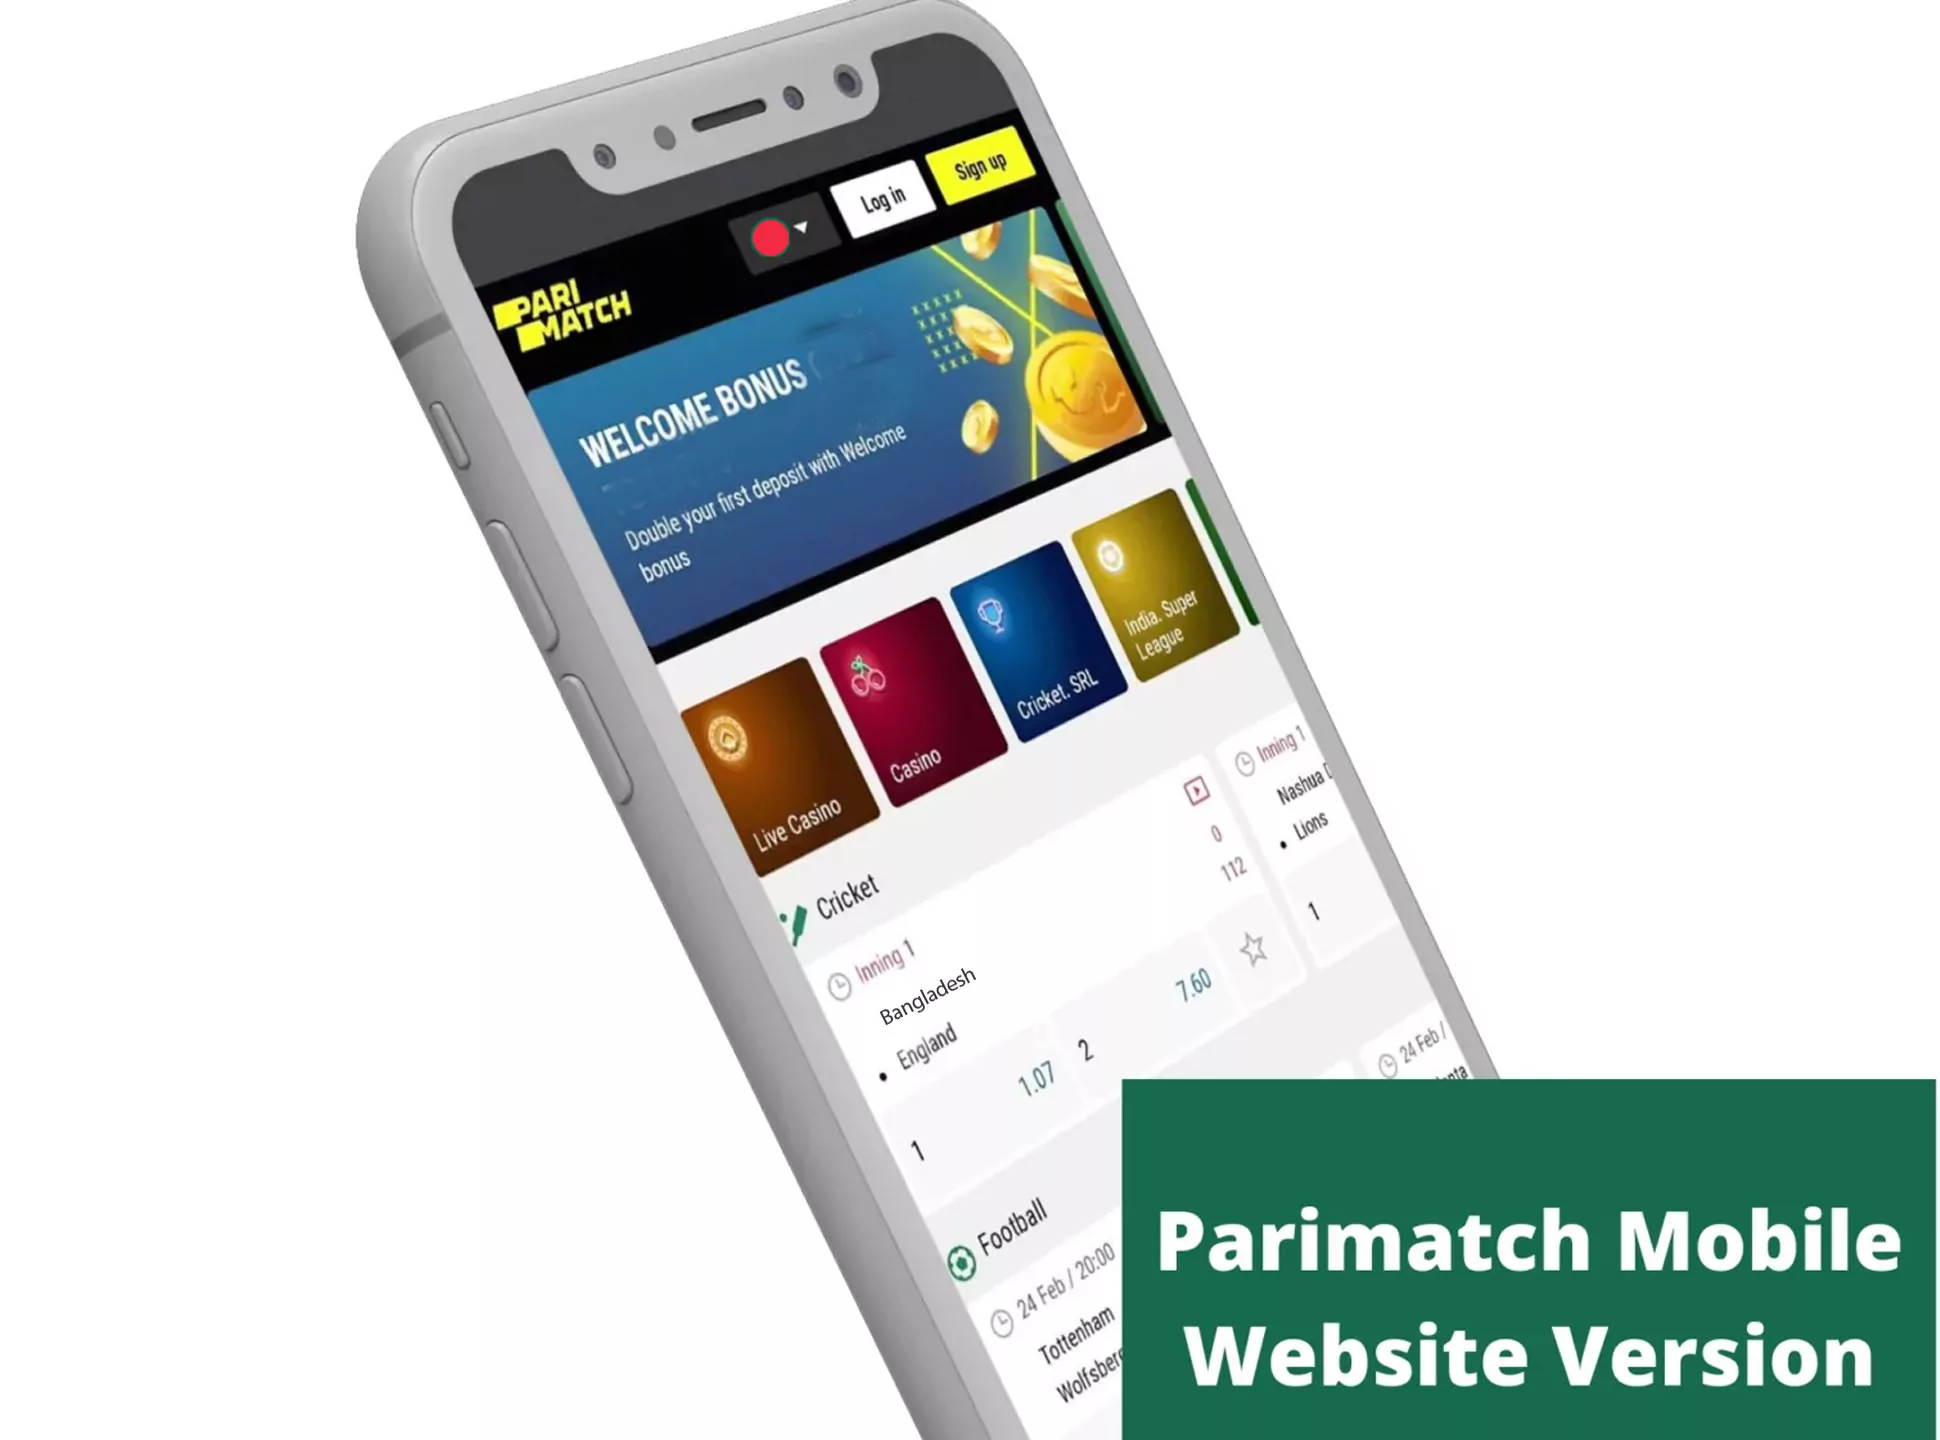 Parimatch mobile website version has the same .